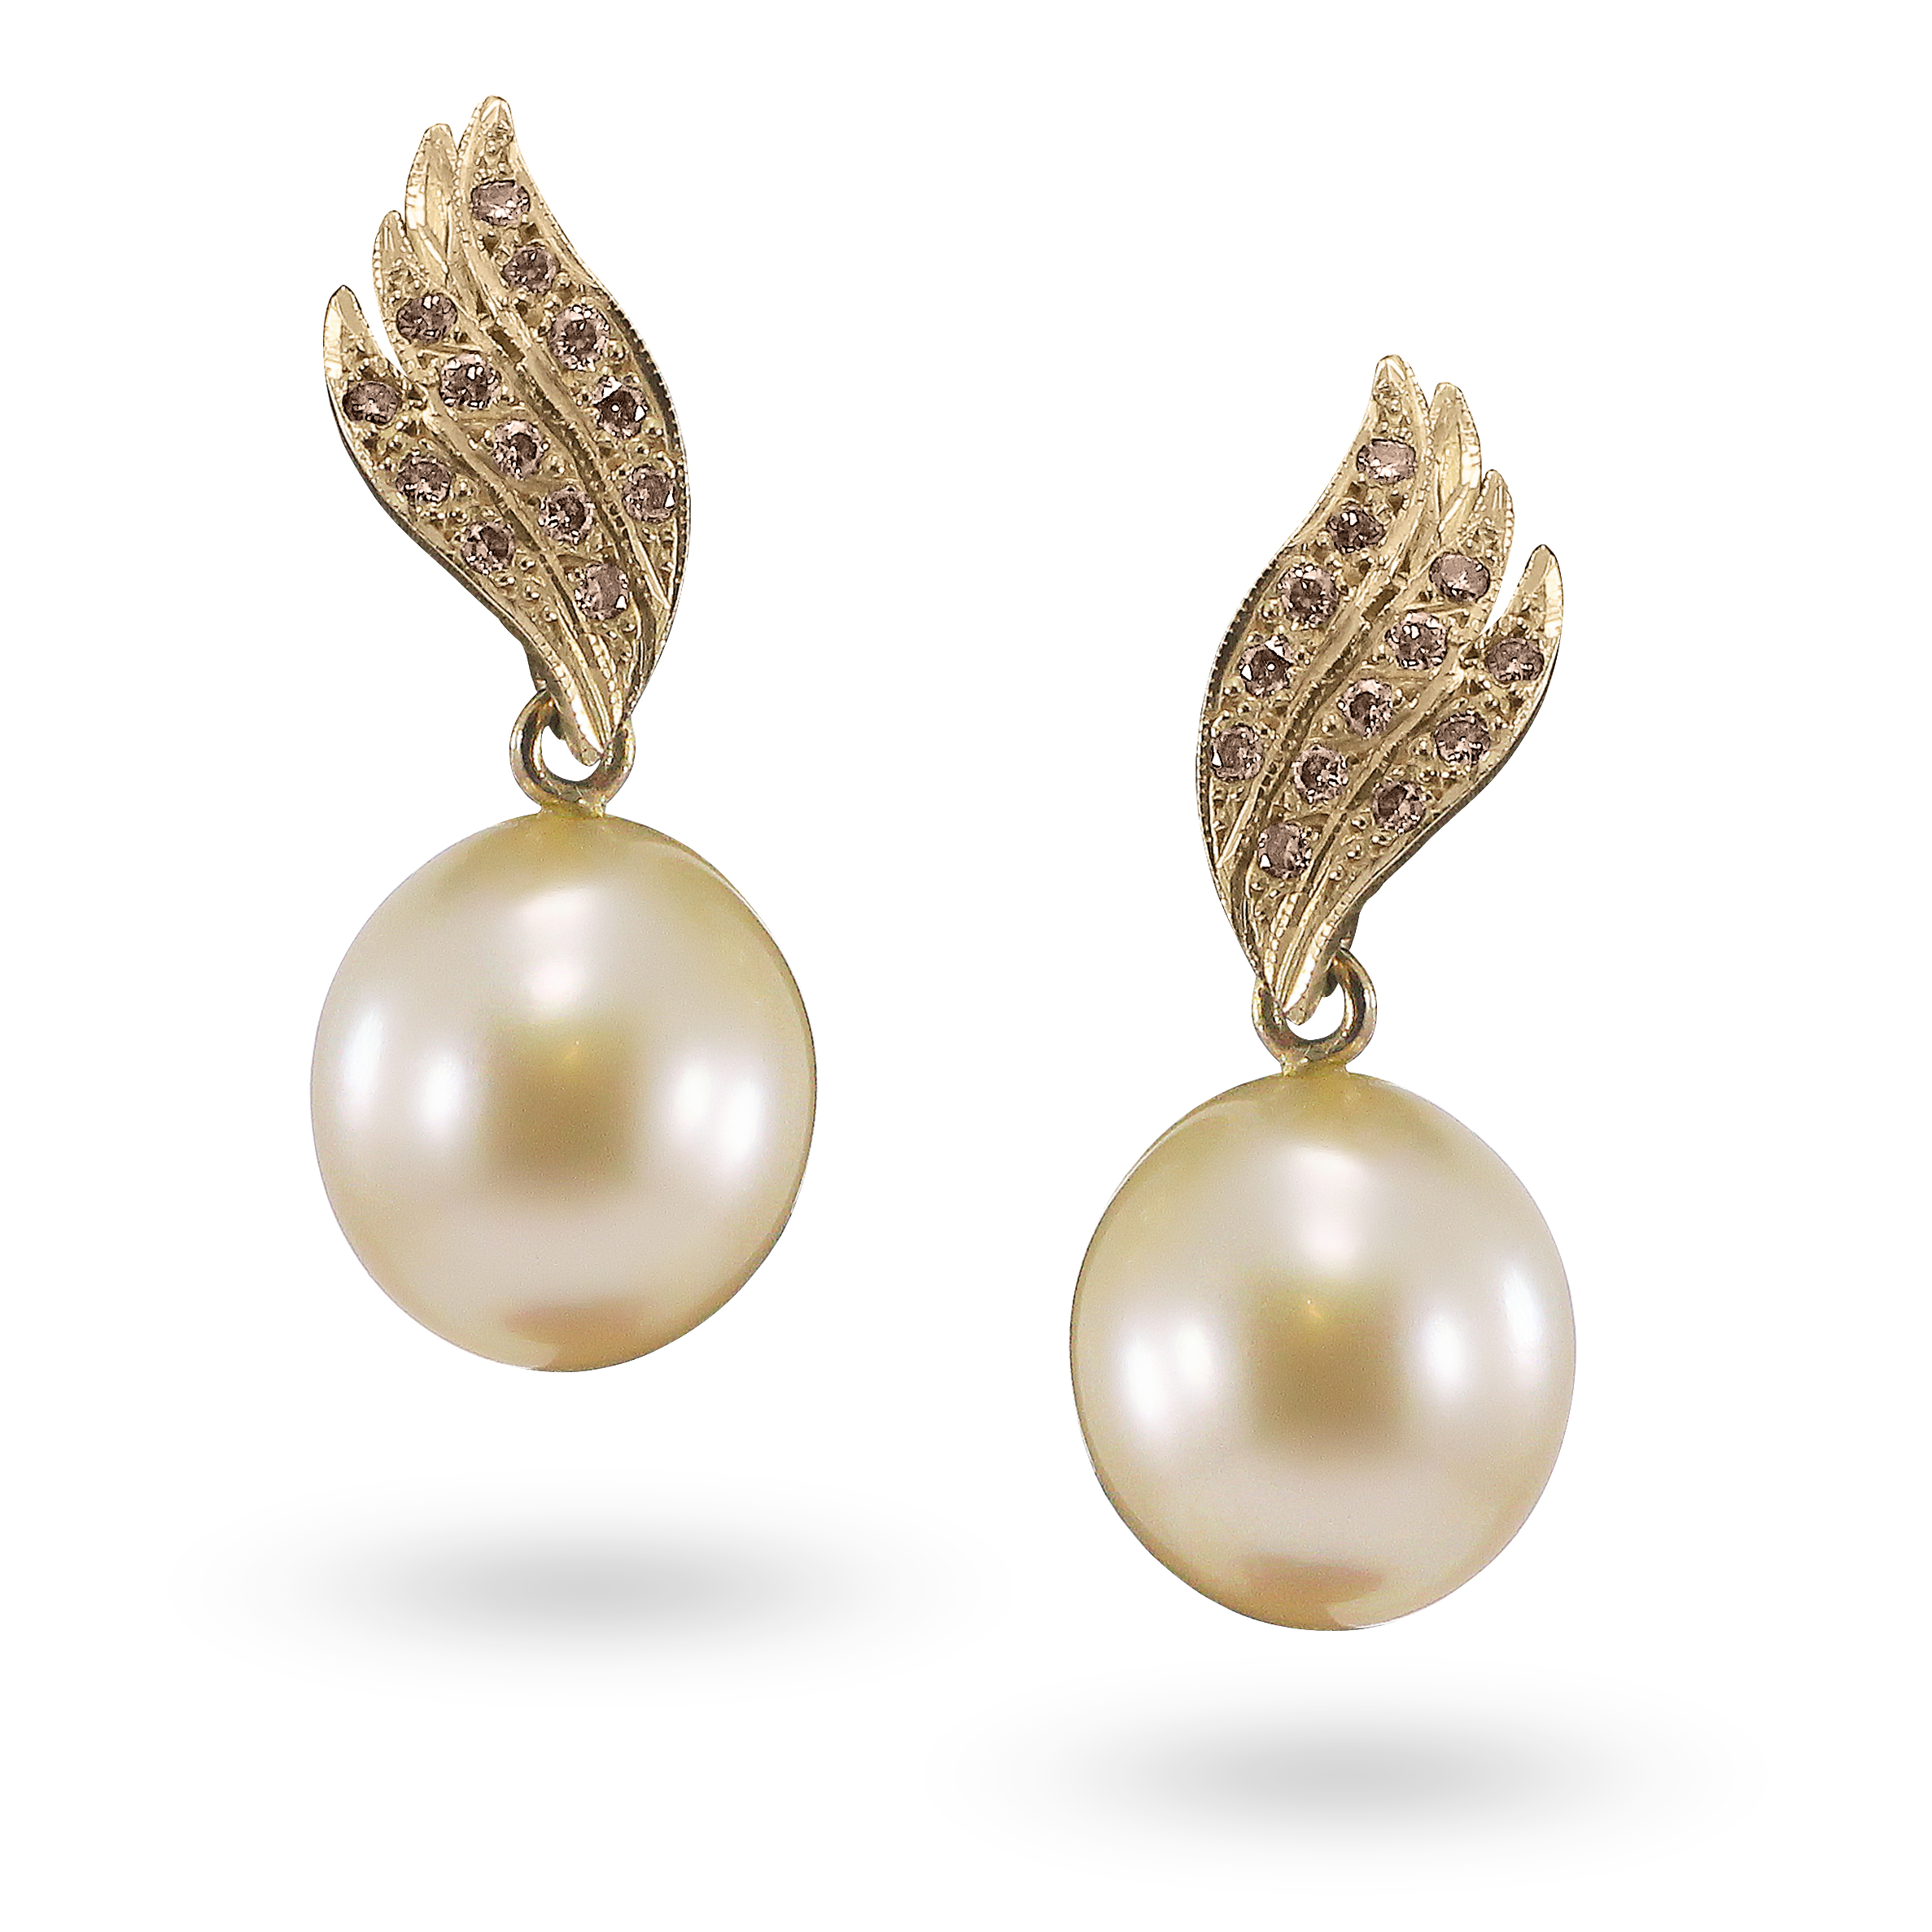 Broome Pearl & Champagne Diamond Earrings.jpg